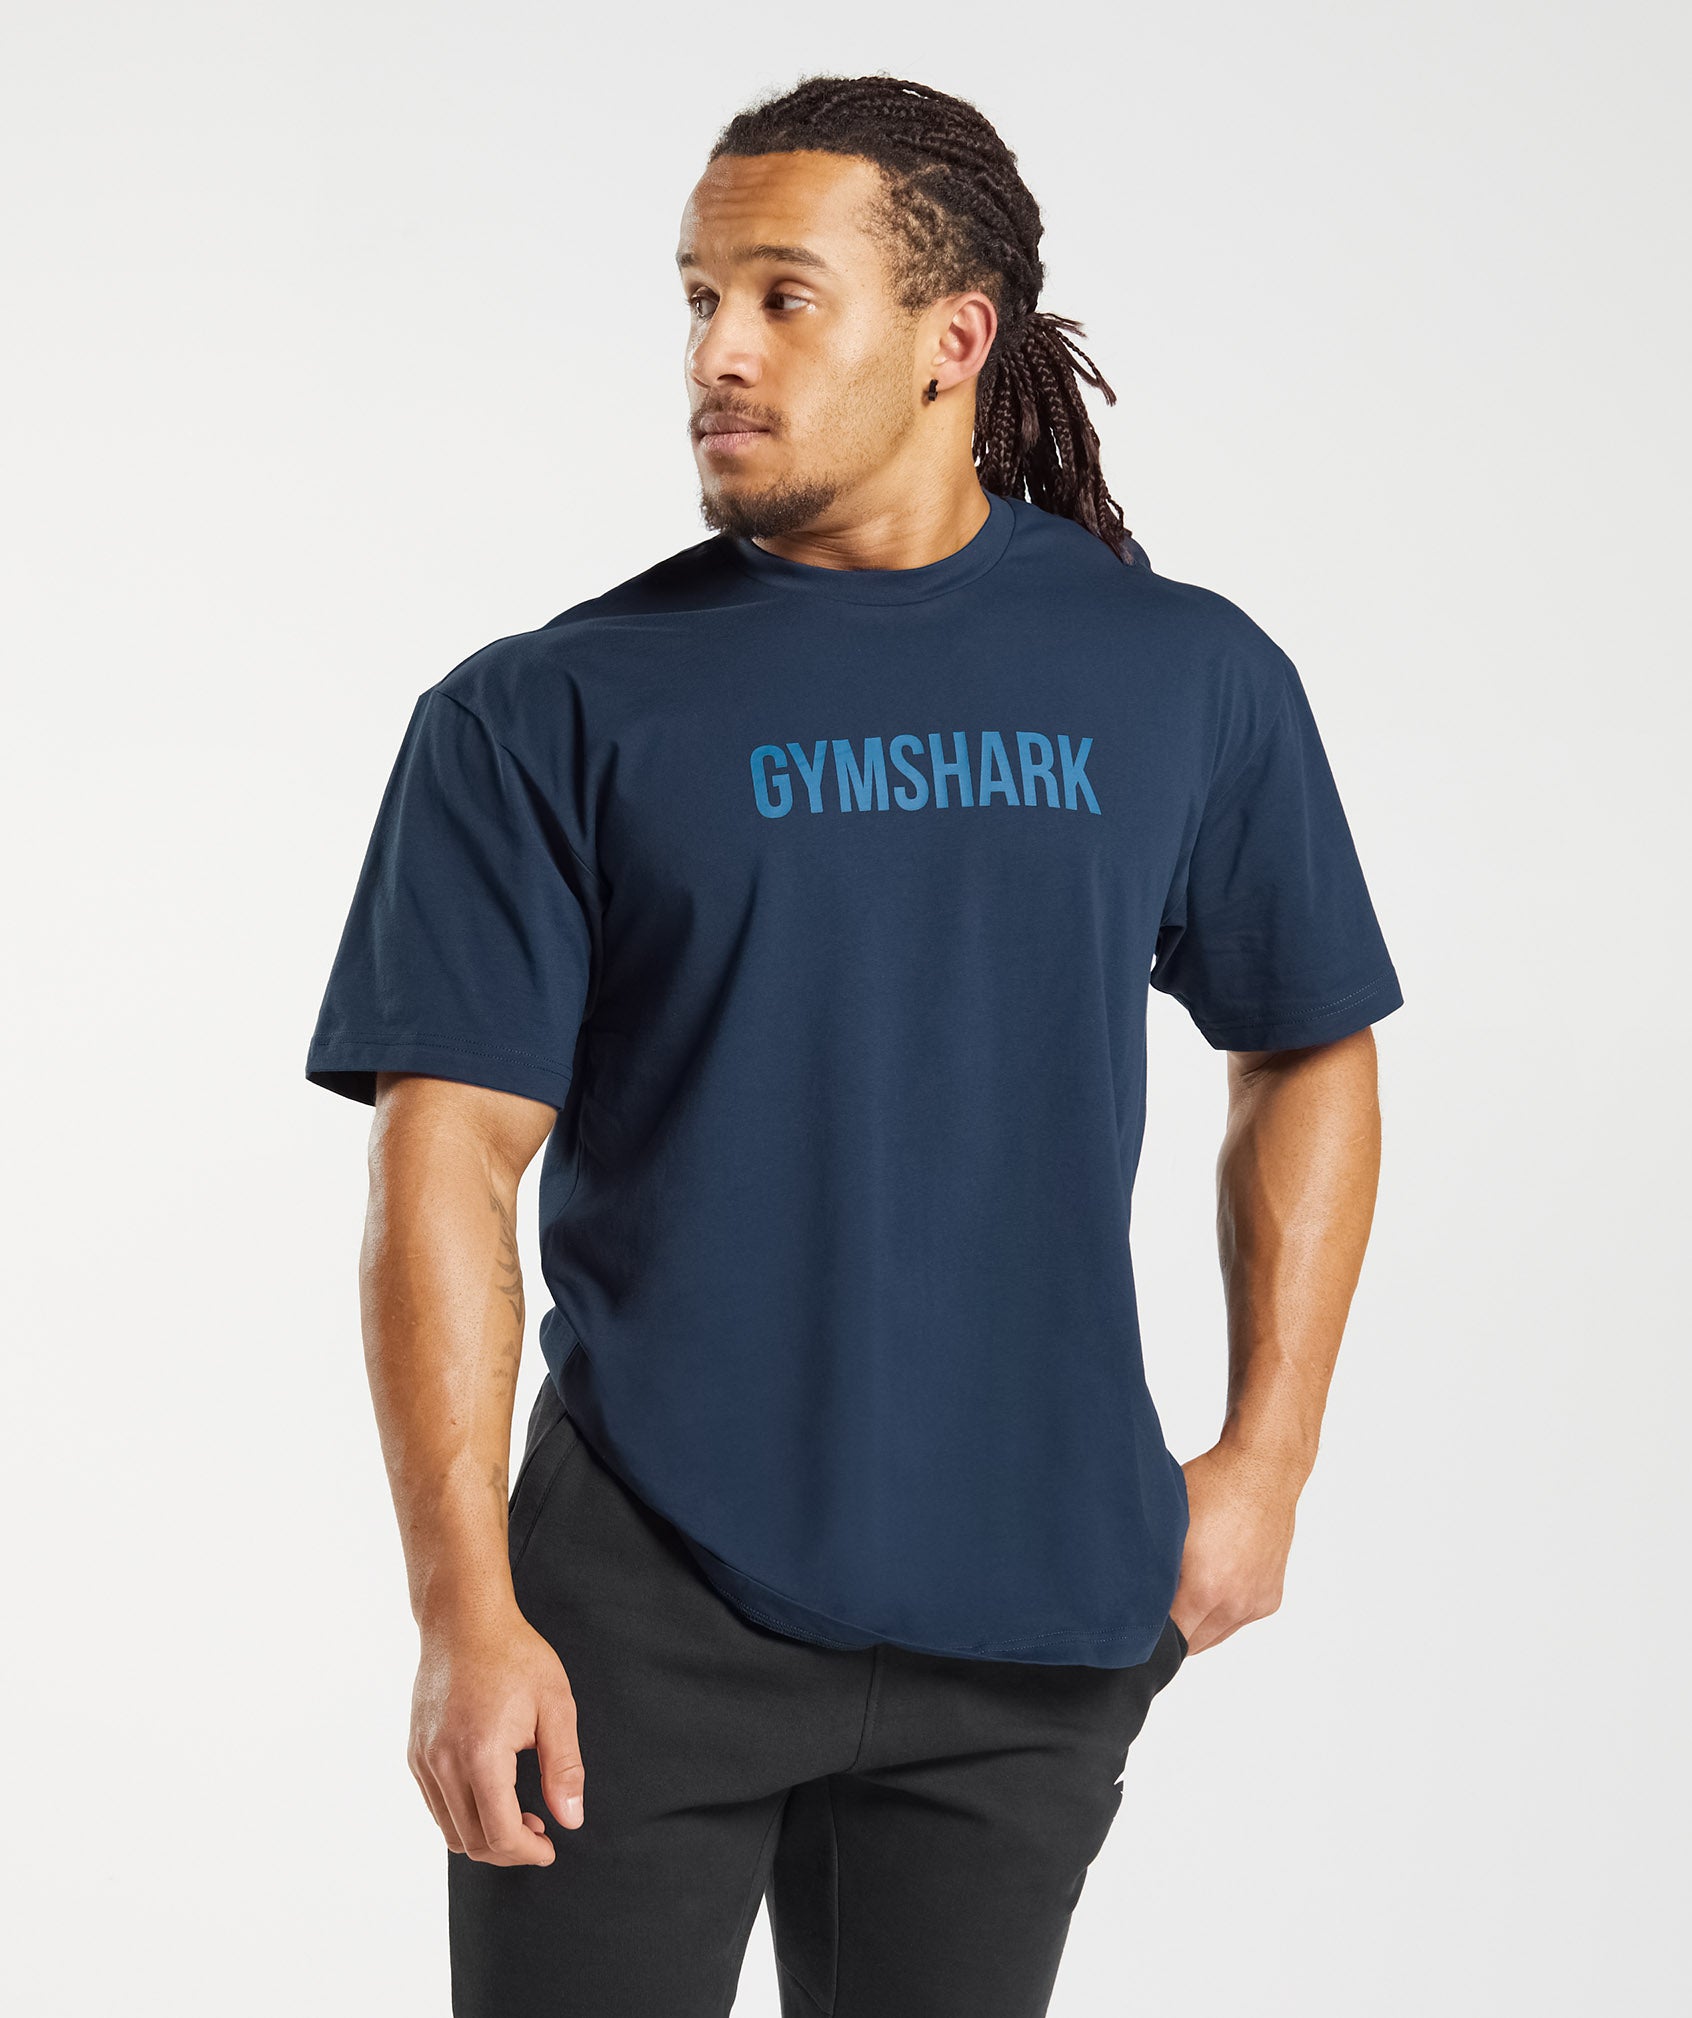 Gymshark Apollo Oversized T-Shirt - Navy